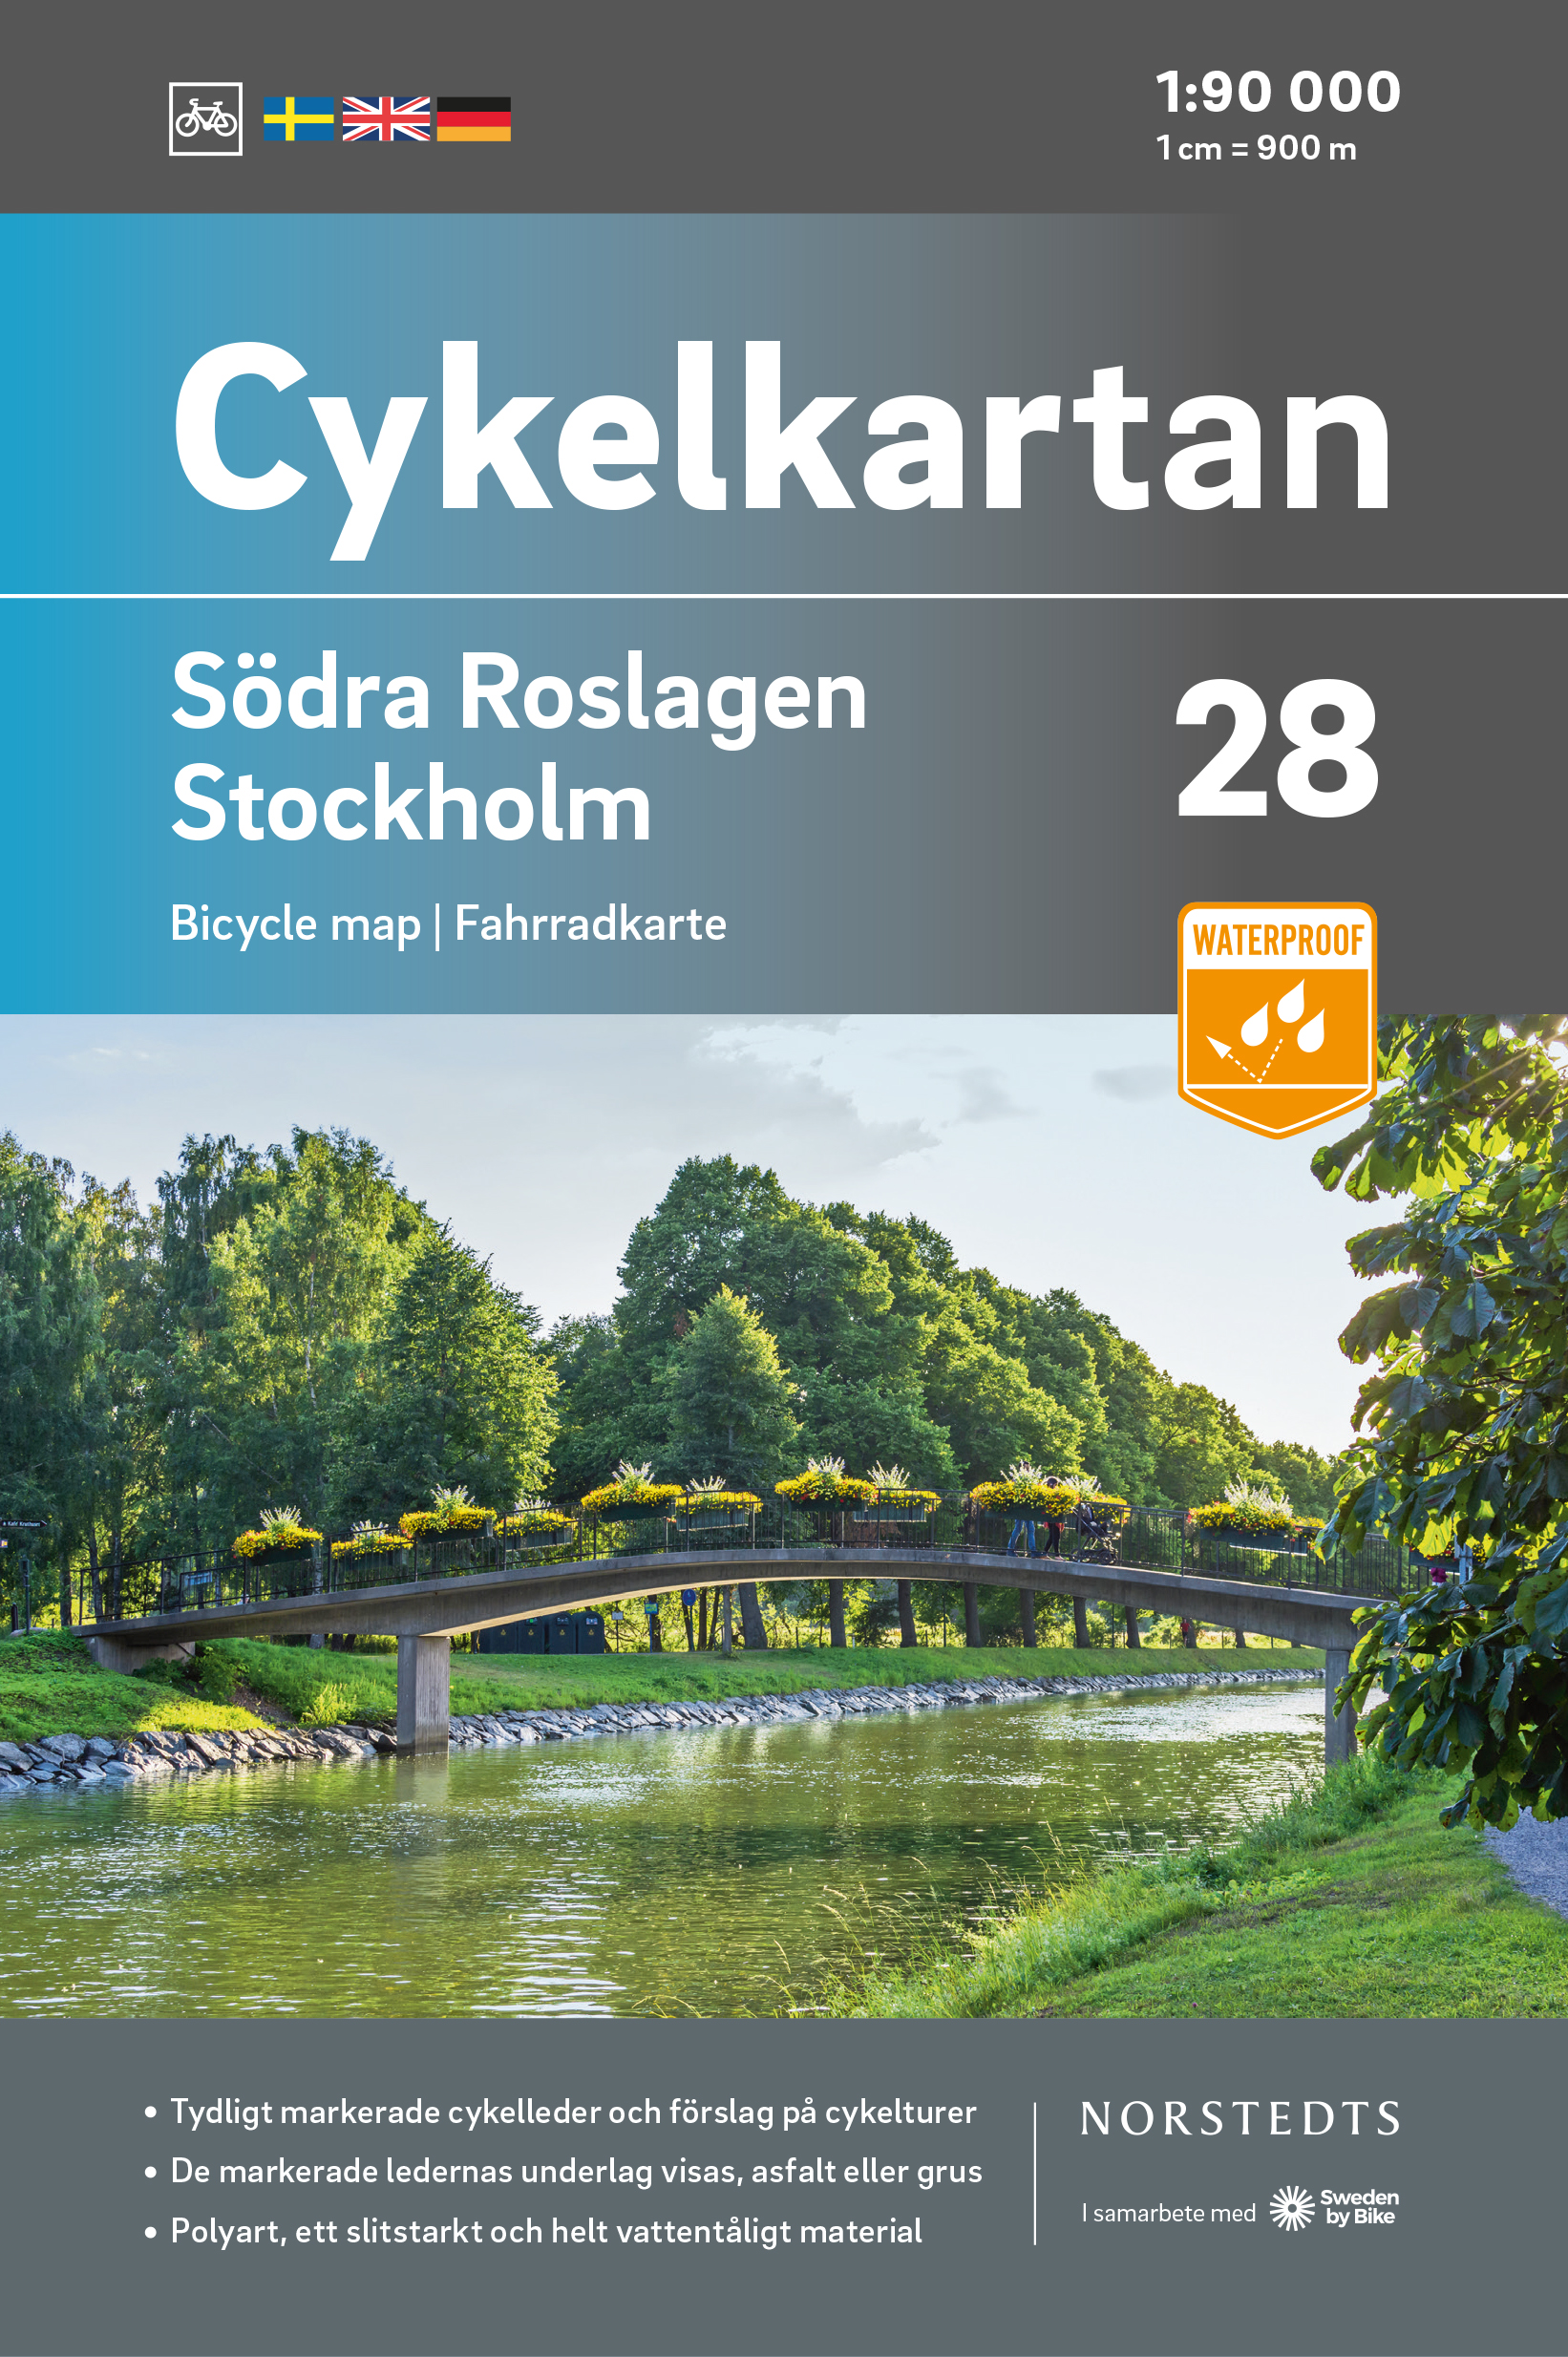 Online bestellen: Fietskaart 28 Cykelkartan Södra Roslagen south - Stockholm | Norstedts